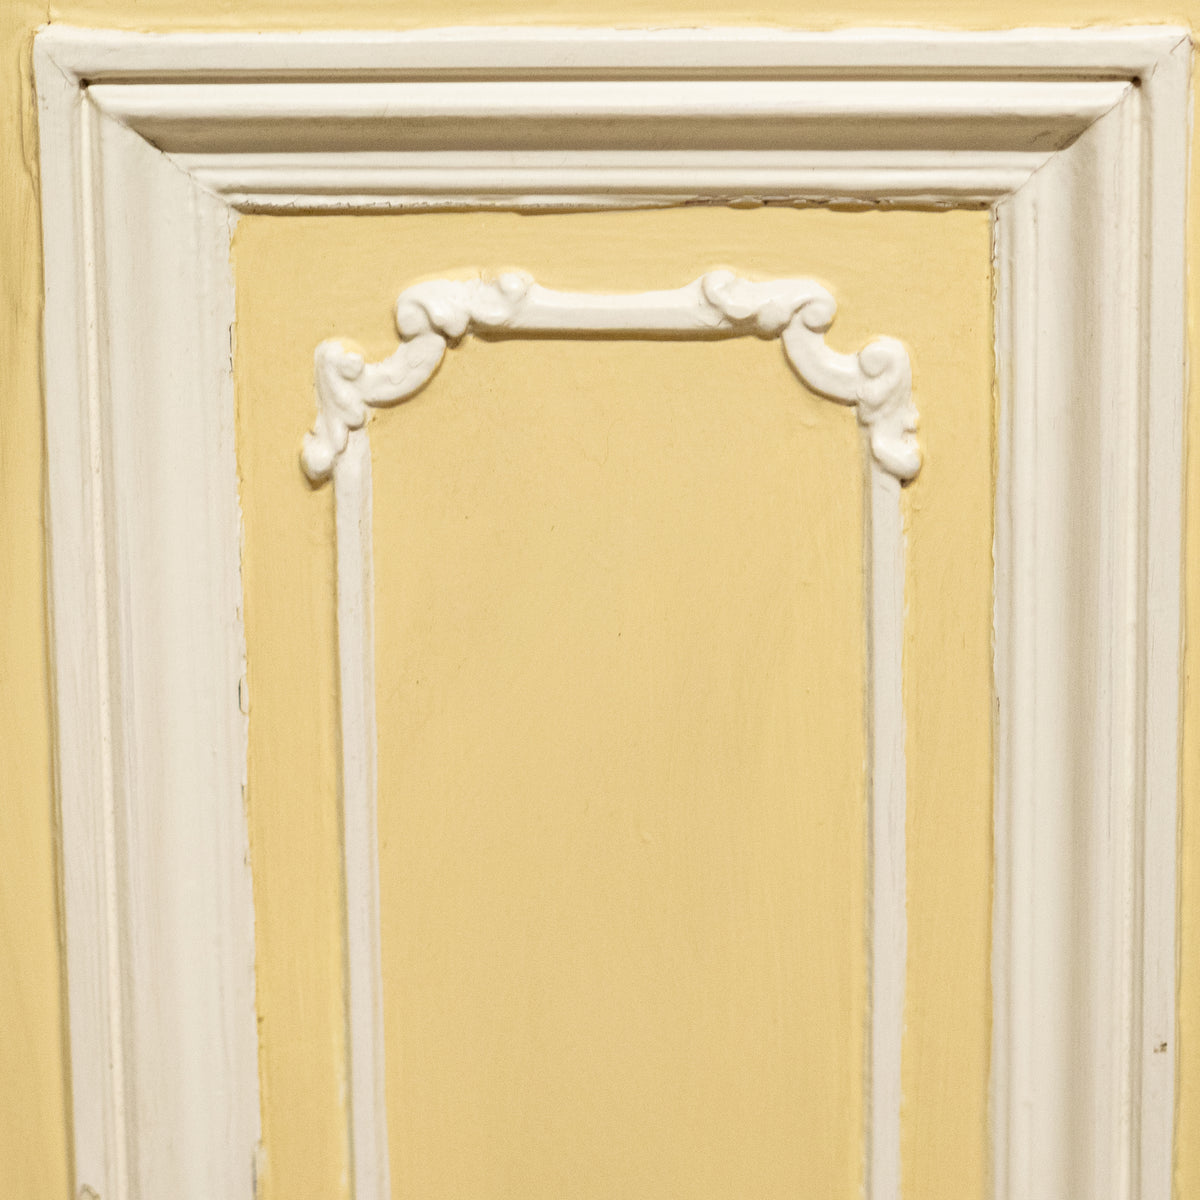 Antique Victorian 4 Panel Door with Ornate Detailing - 209cm x 91.5cm | The Architectural Forum